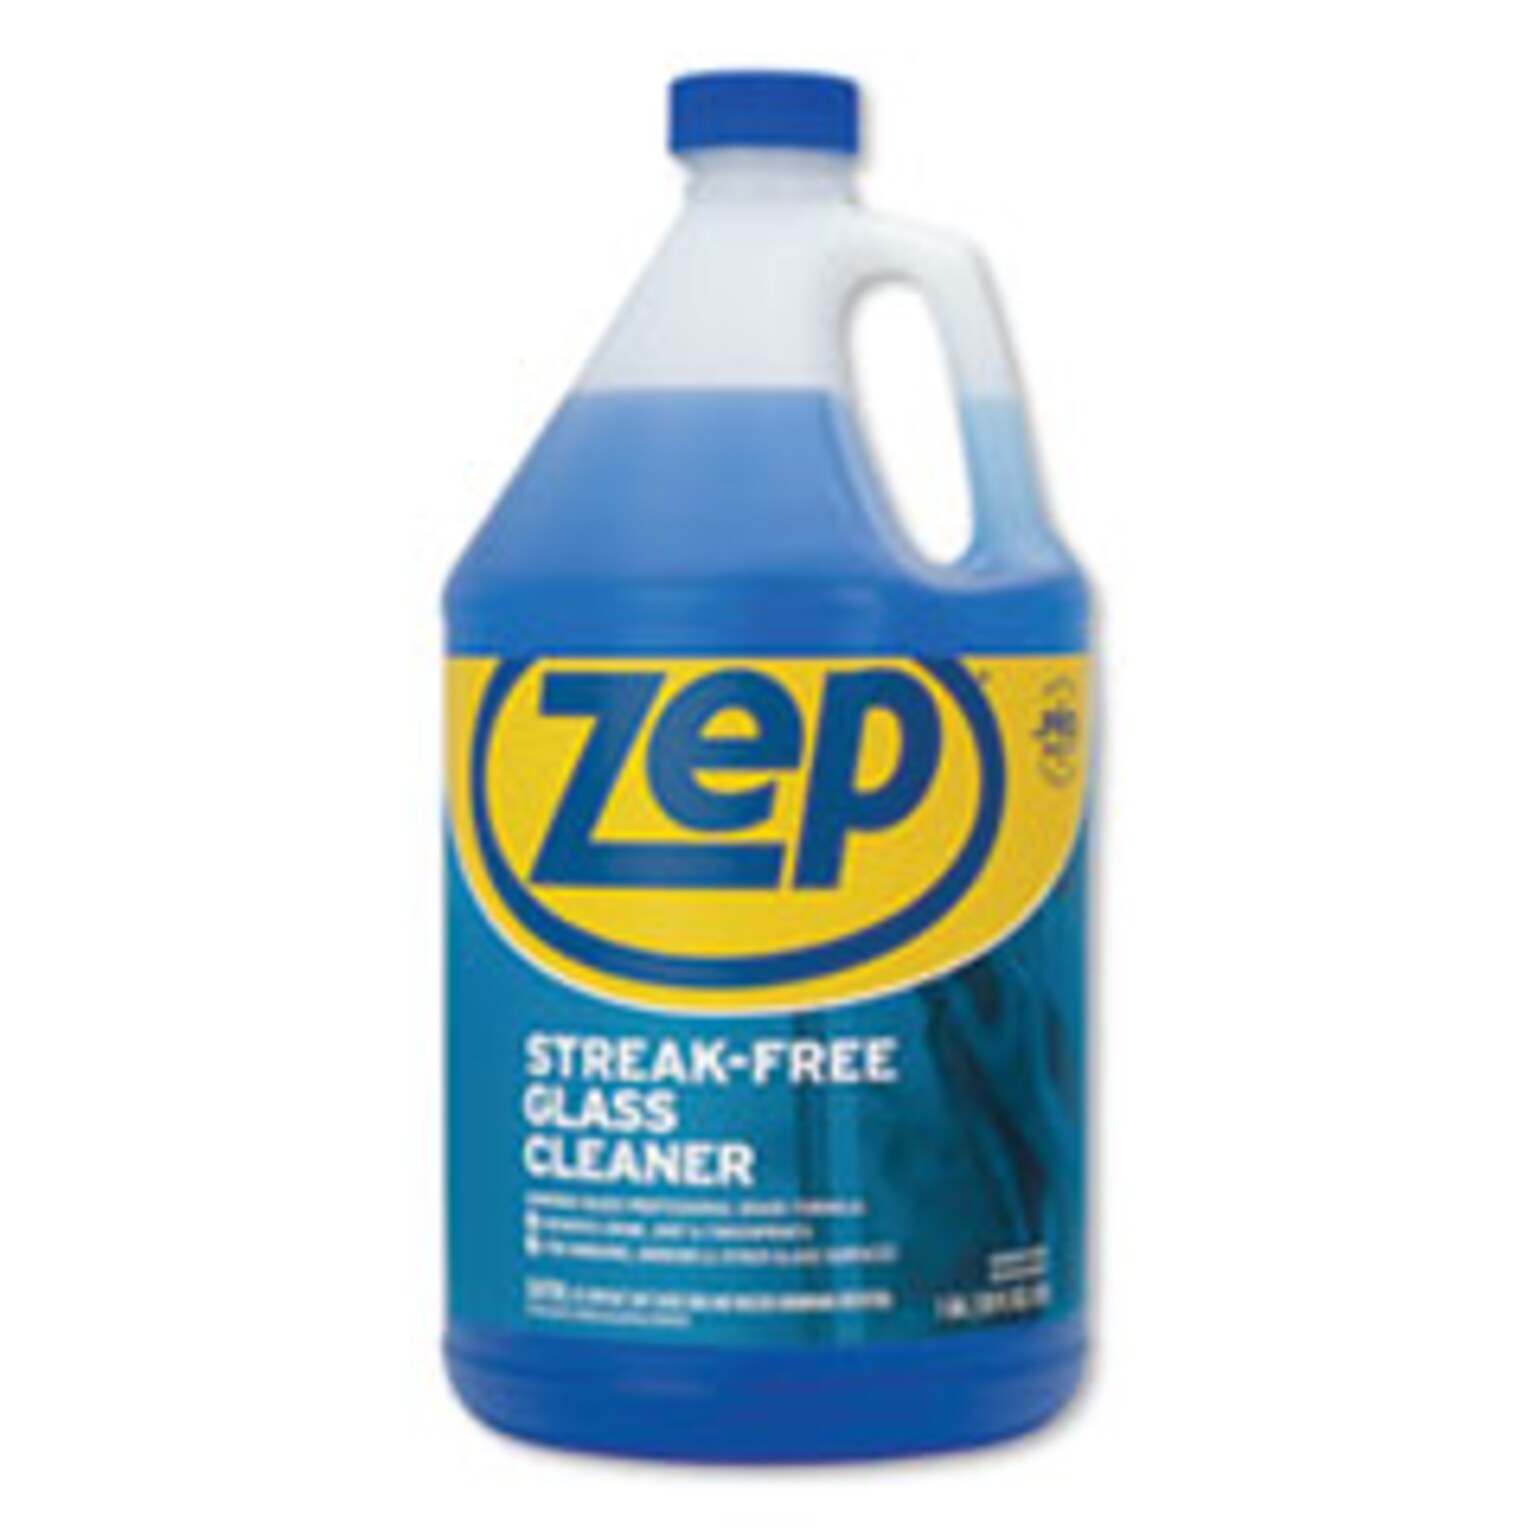 Zep Streak-Free Glass Cleaner, Pleasant Scent, 1 gal Bottle (ZPEZU1120128EA)